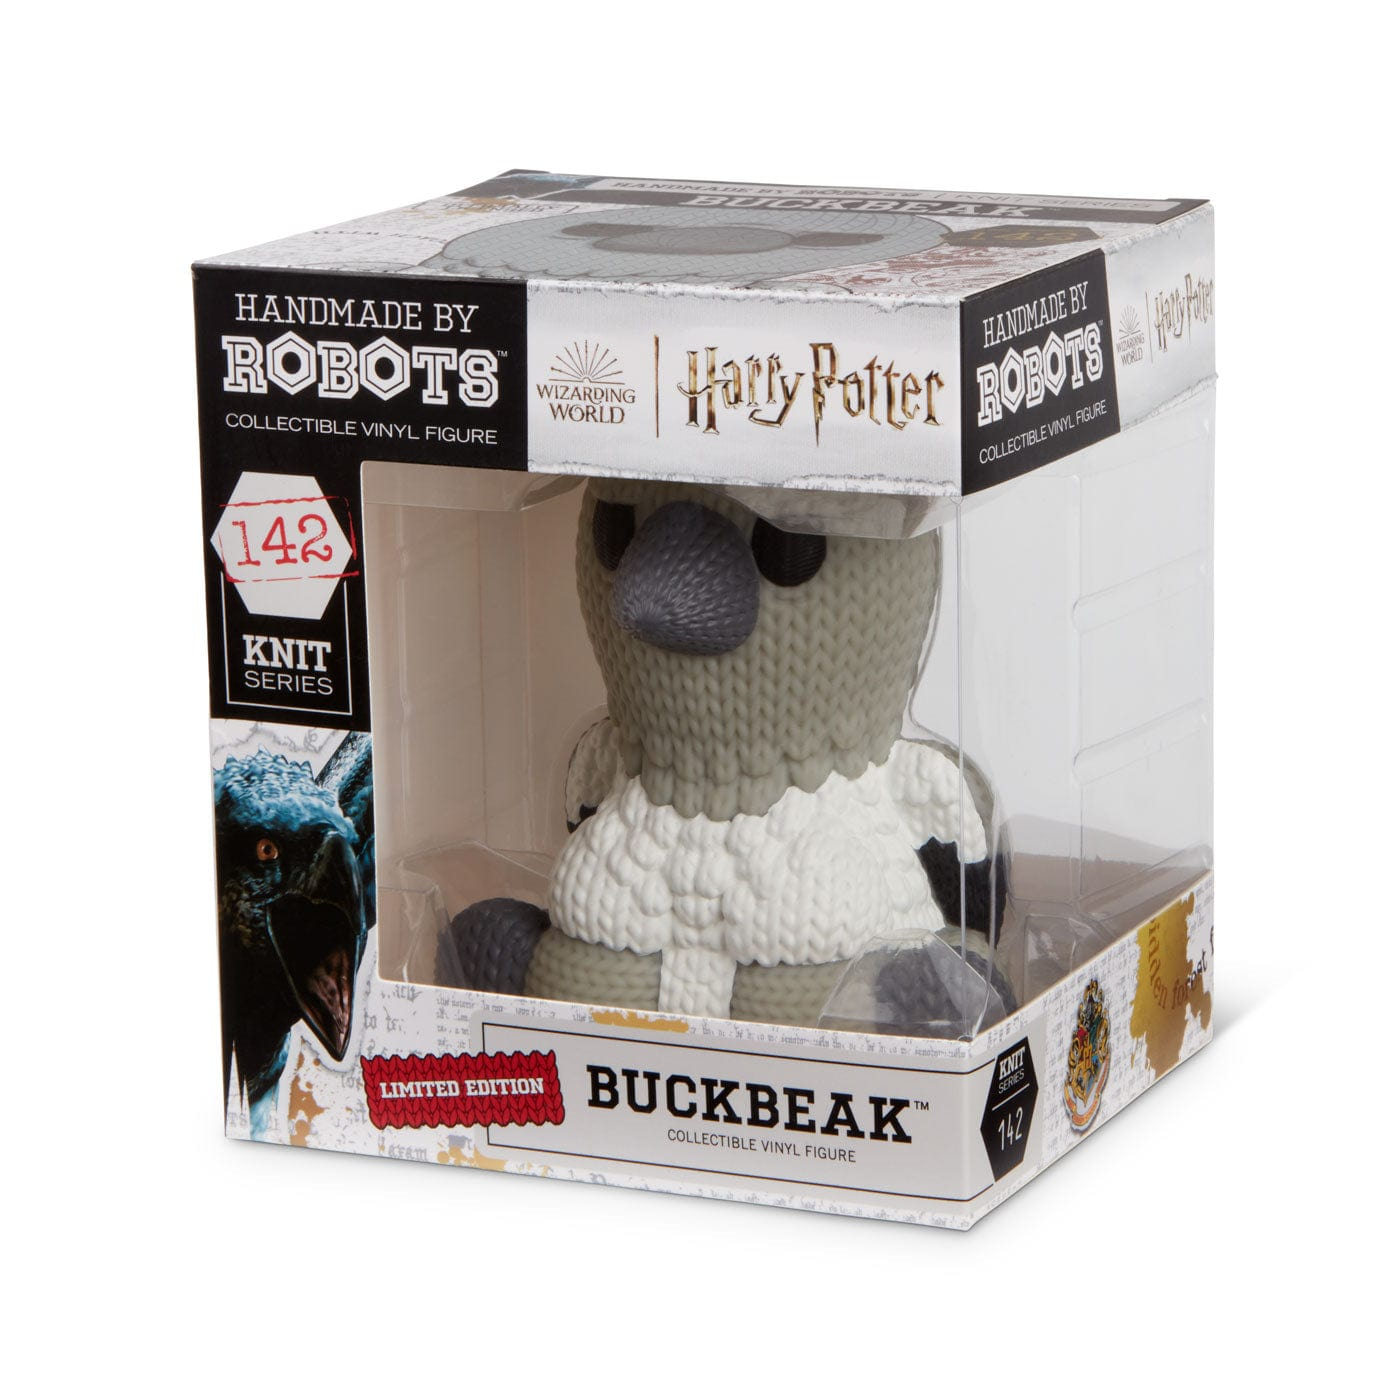 Buckbeak #142 - Harry Potter - Handmade by Robots - Limited Edition